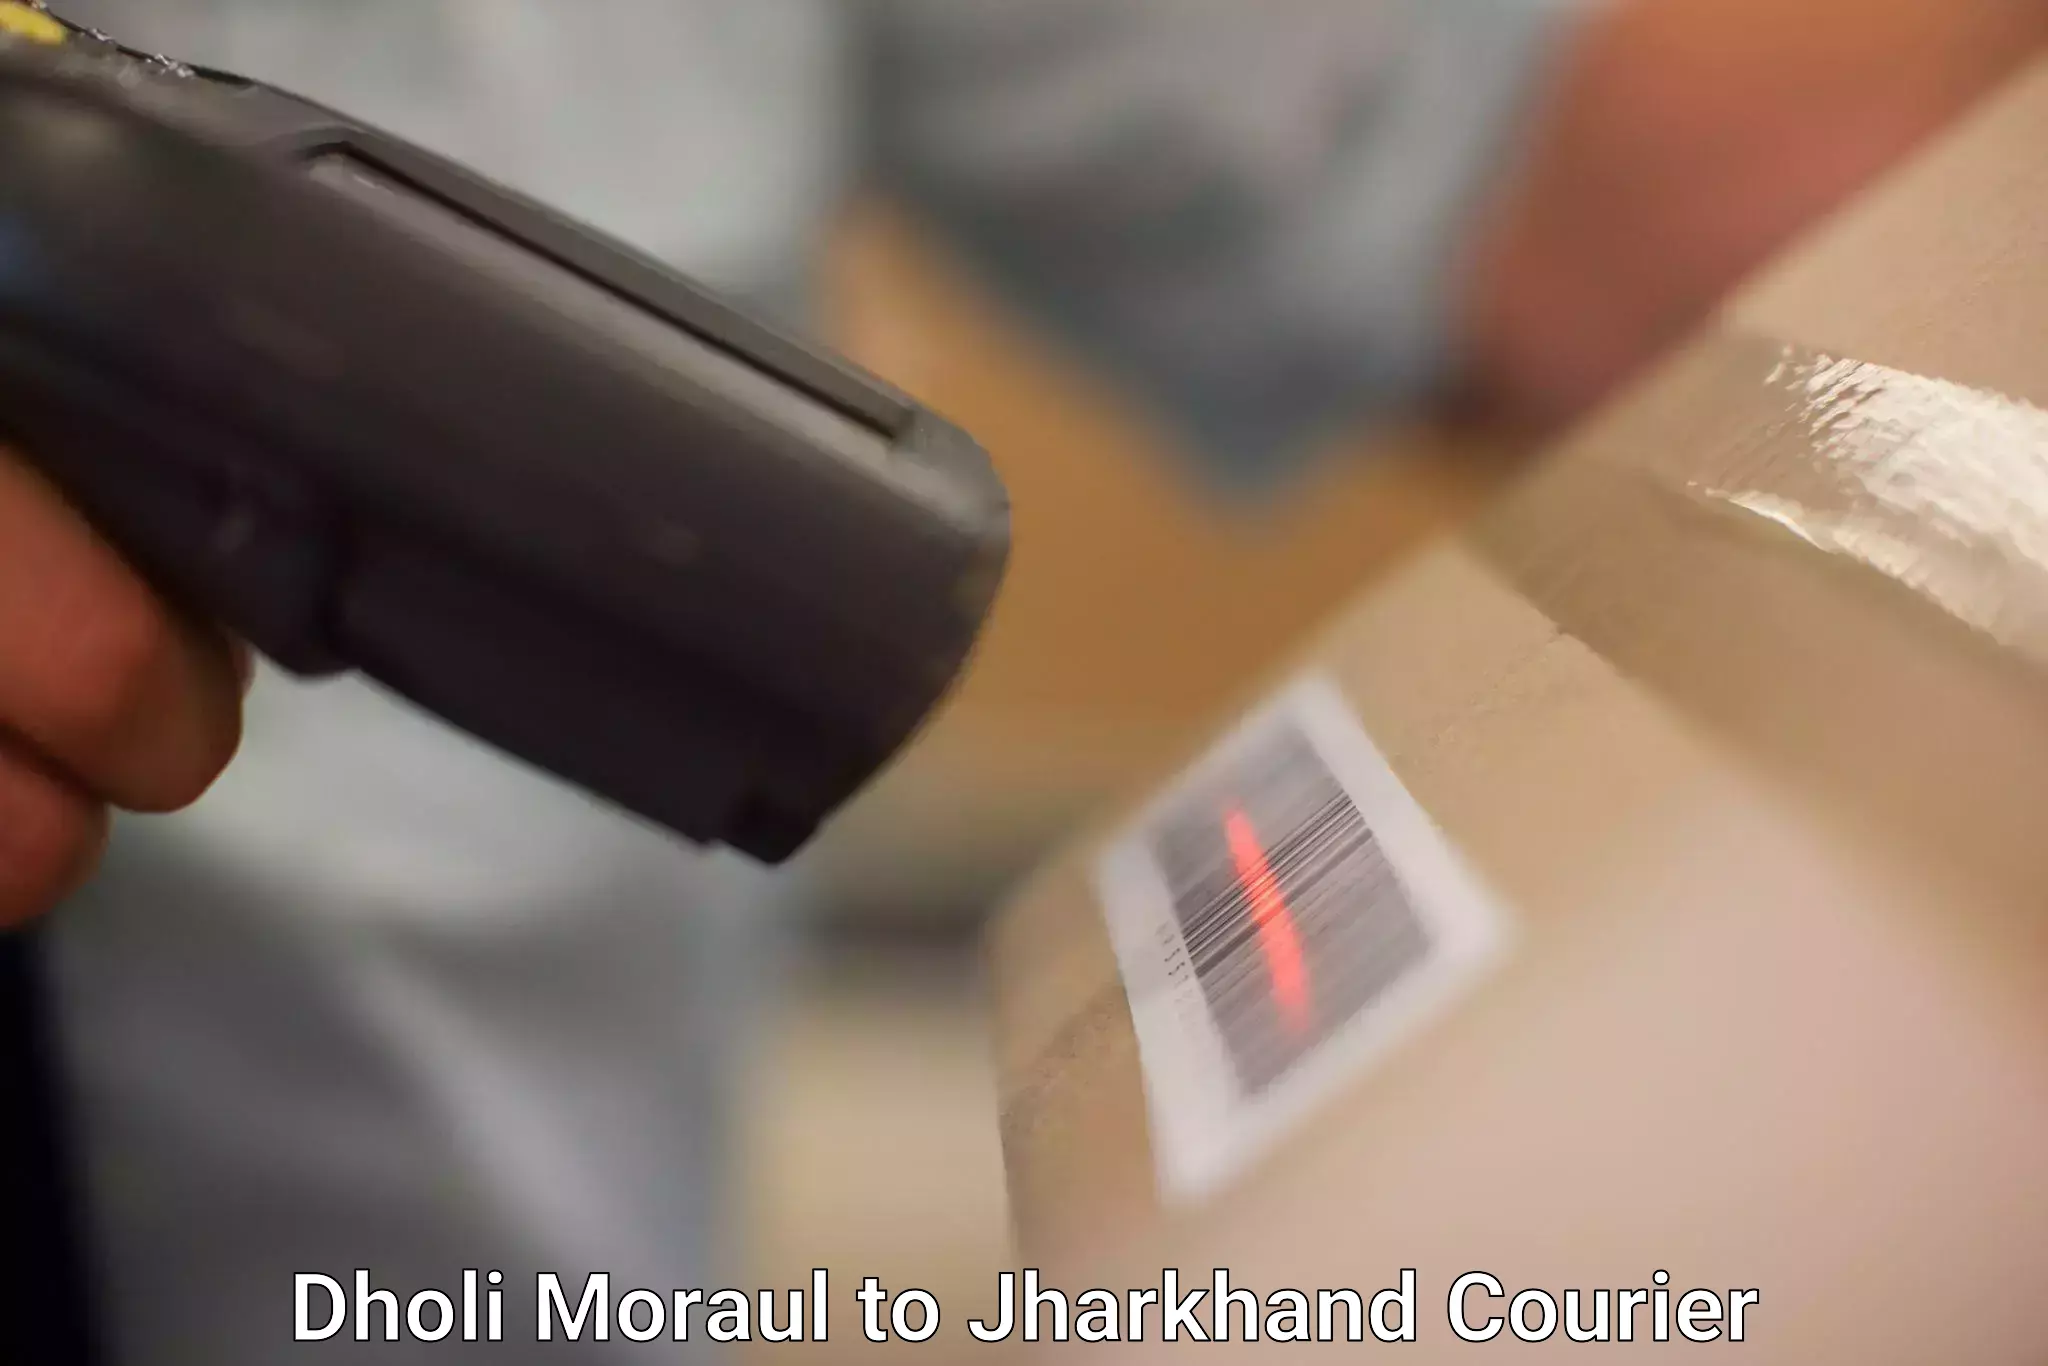 Courier service innovation Dholi Moraul to Medininagar